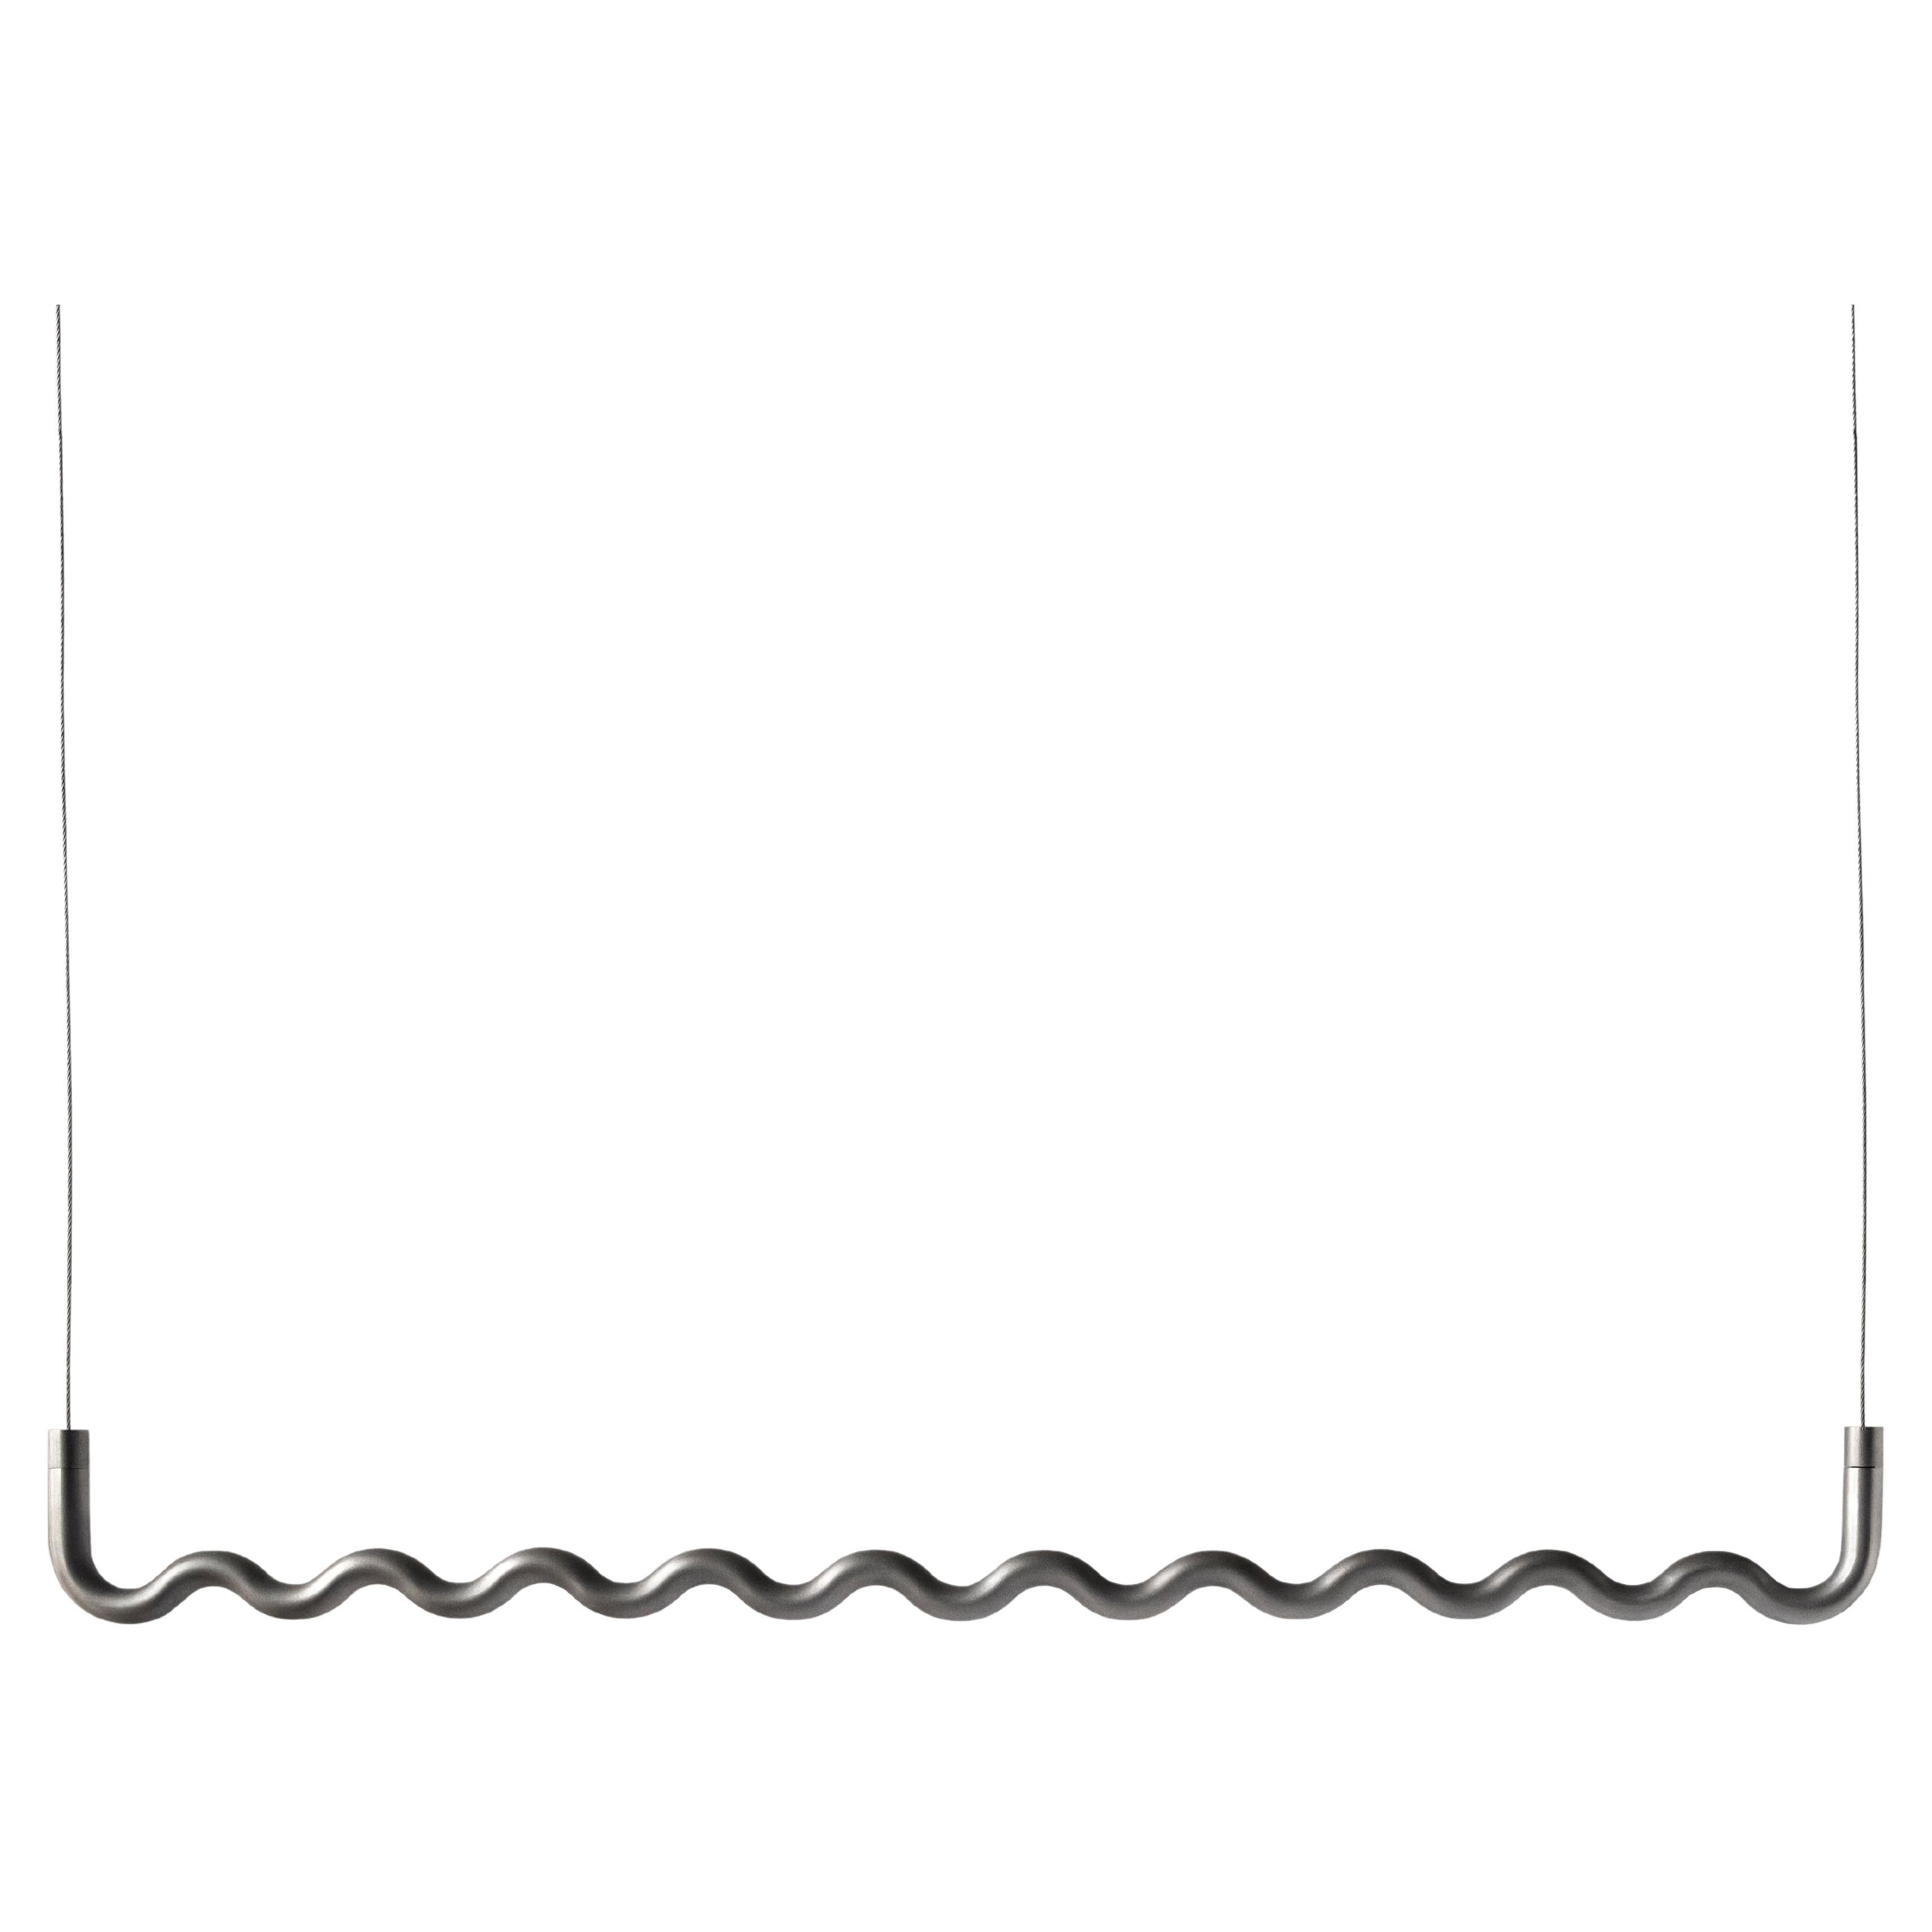 Contemporary Sine Wave Hanging Coat Rack Medium in Raw Aluminum by Erik Olovsson For Sale